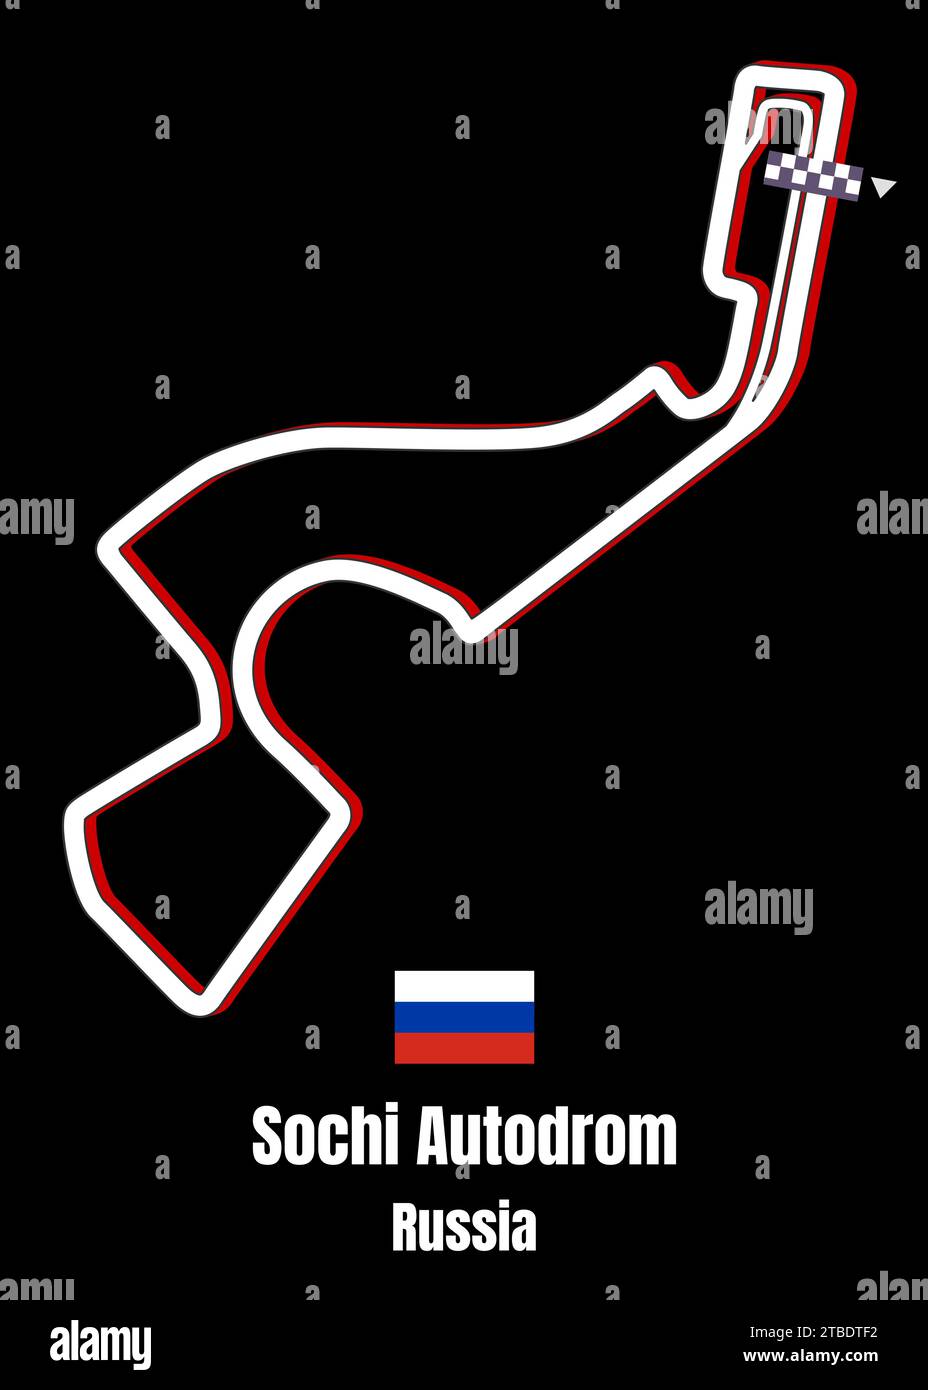 Sochi Autodrom racing circuit map poster Stock Vector